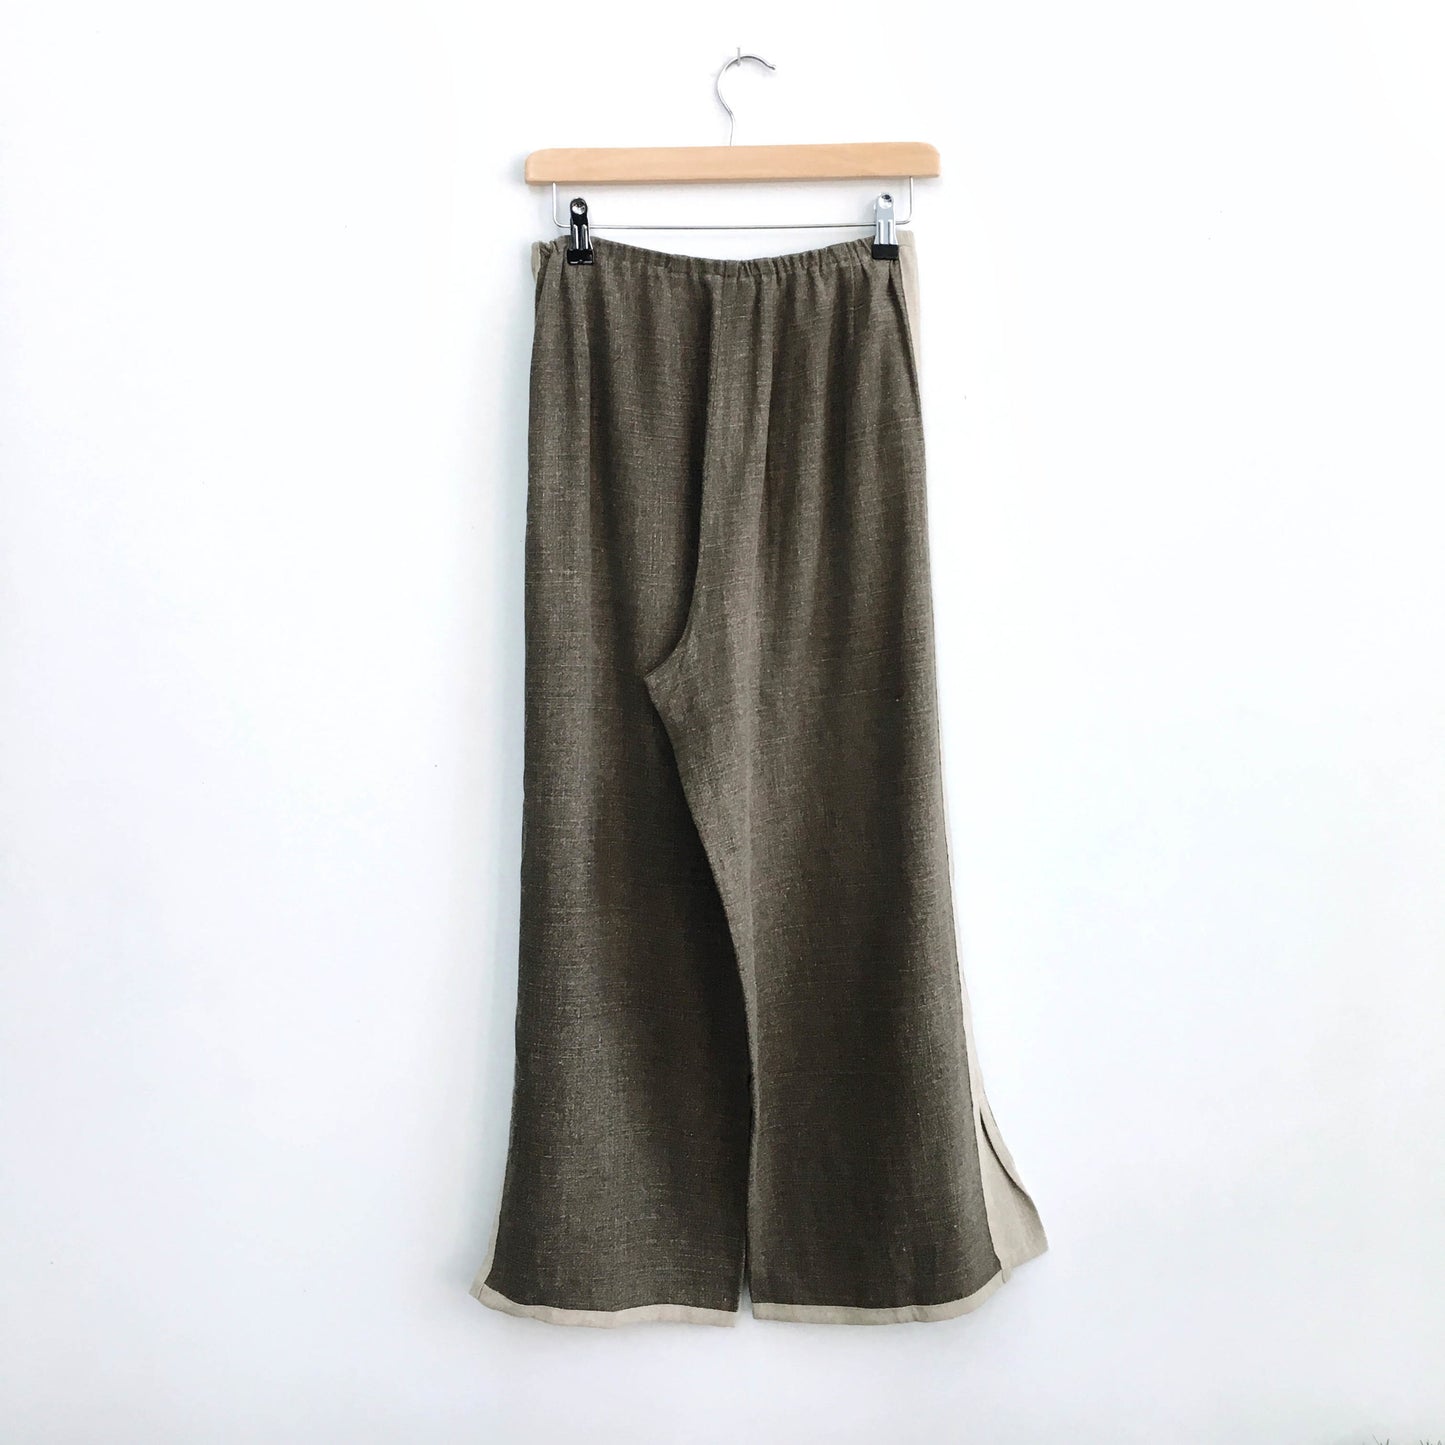 Linda Lundstrom linen pants - size Sm/M